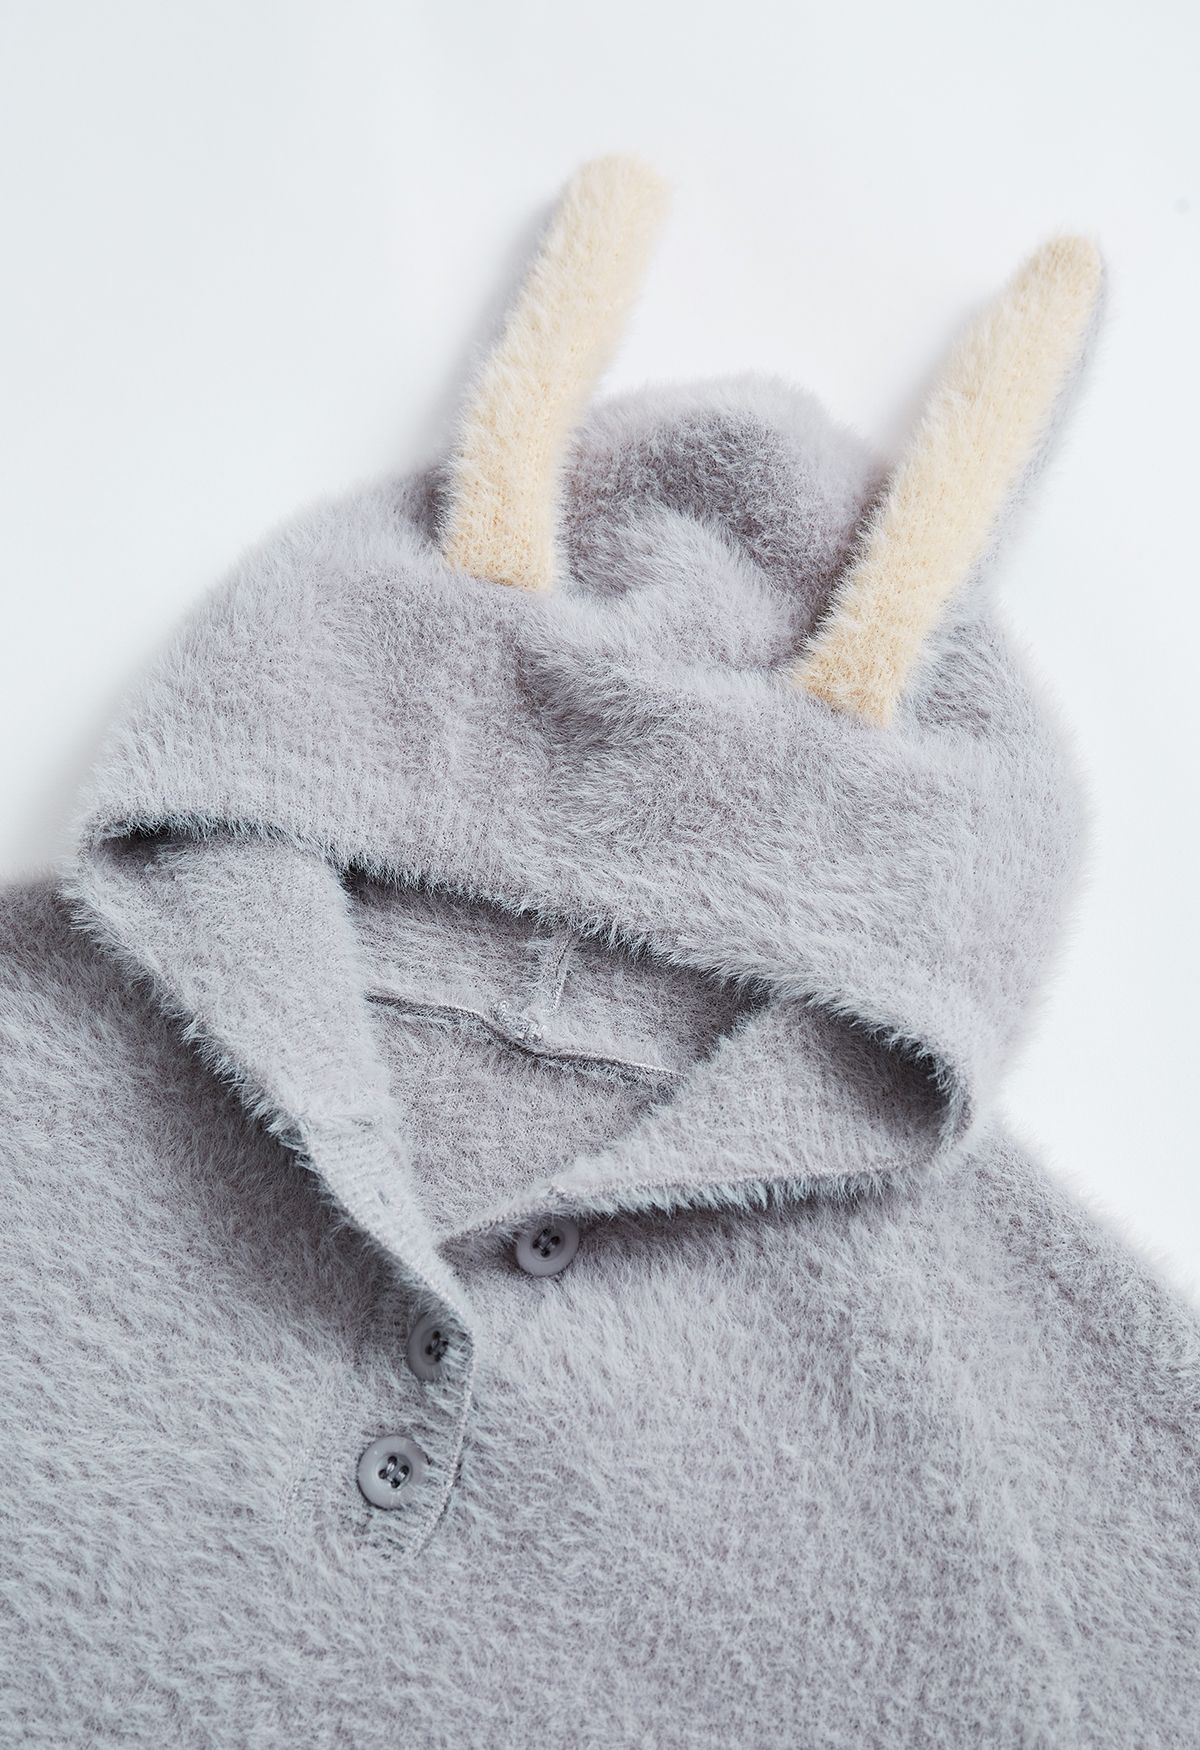 Lovely Bunny Fuzzy Knit Kapuzenpullover in Grau für Kinder